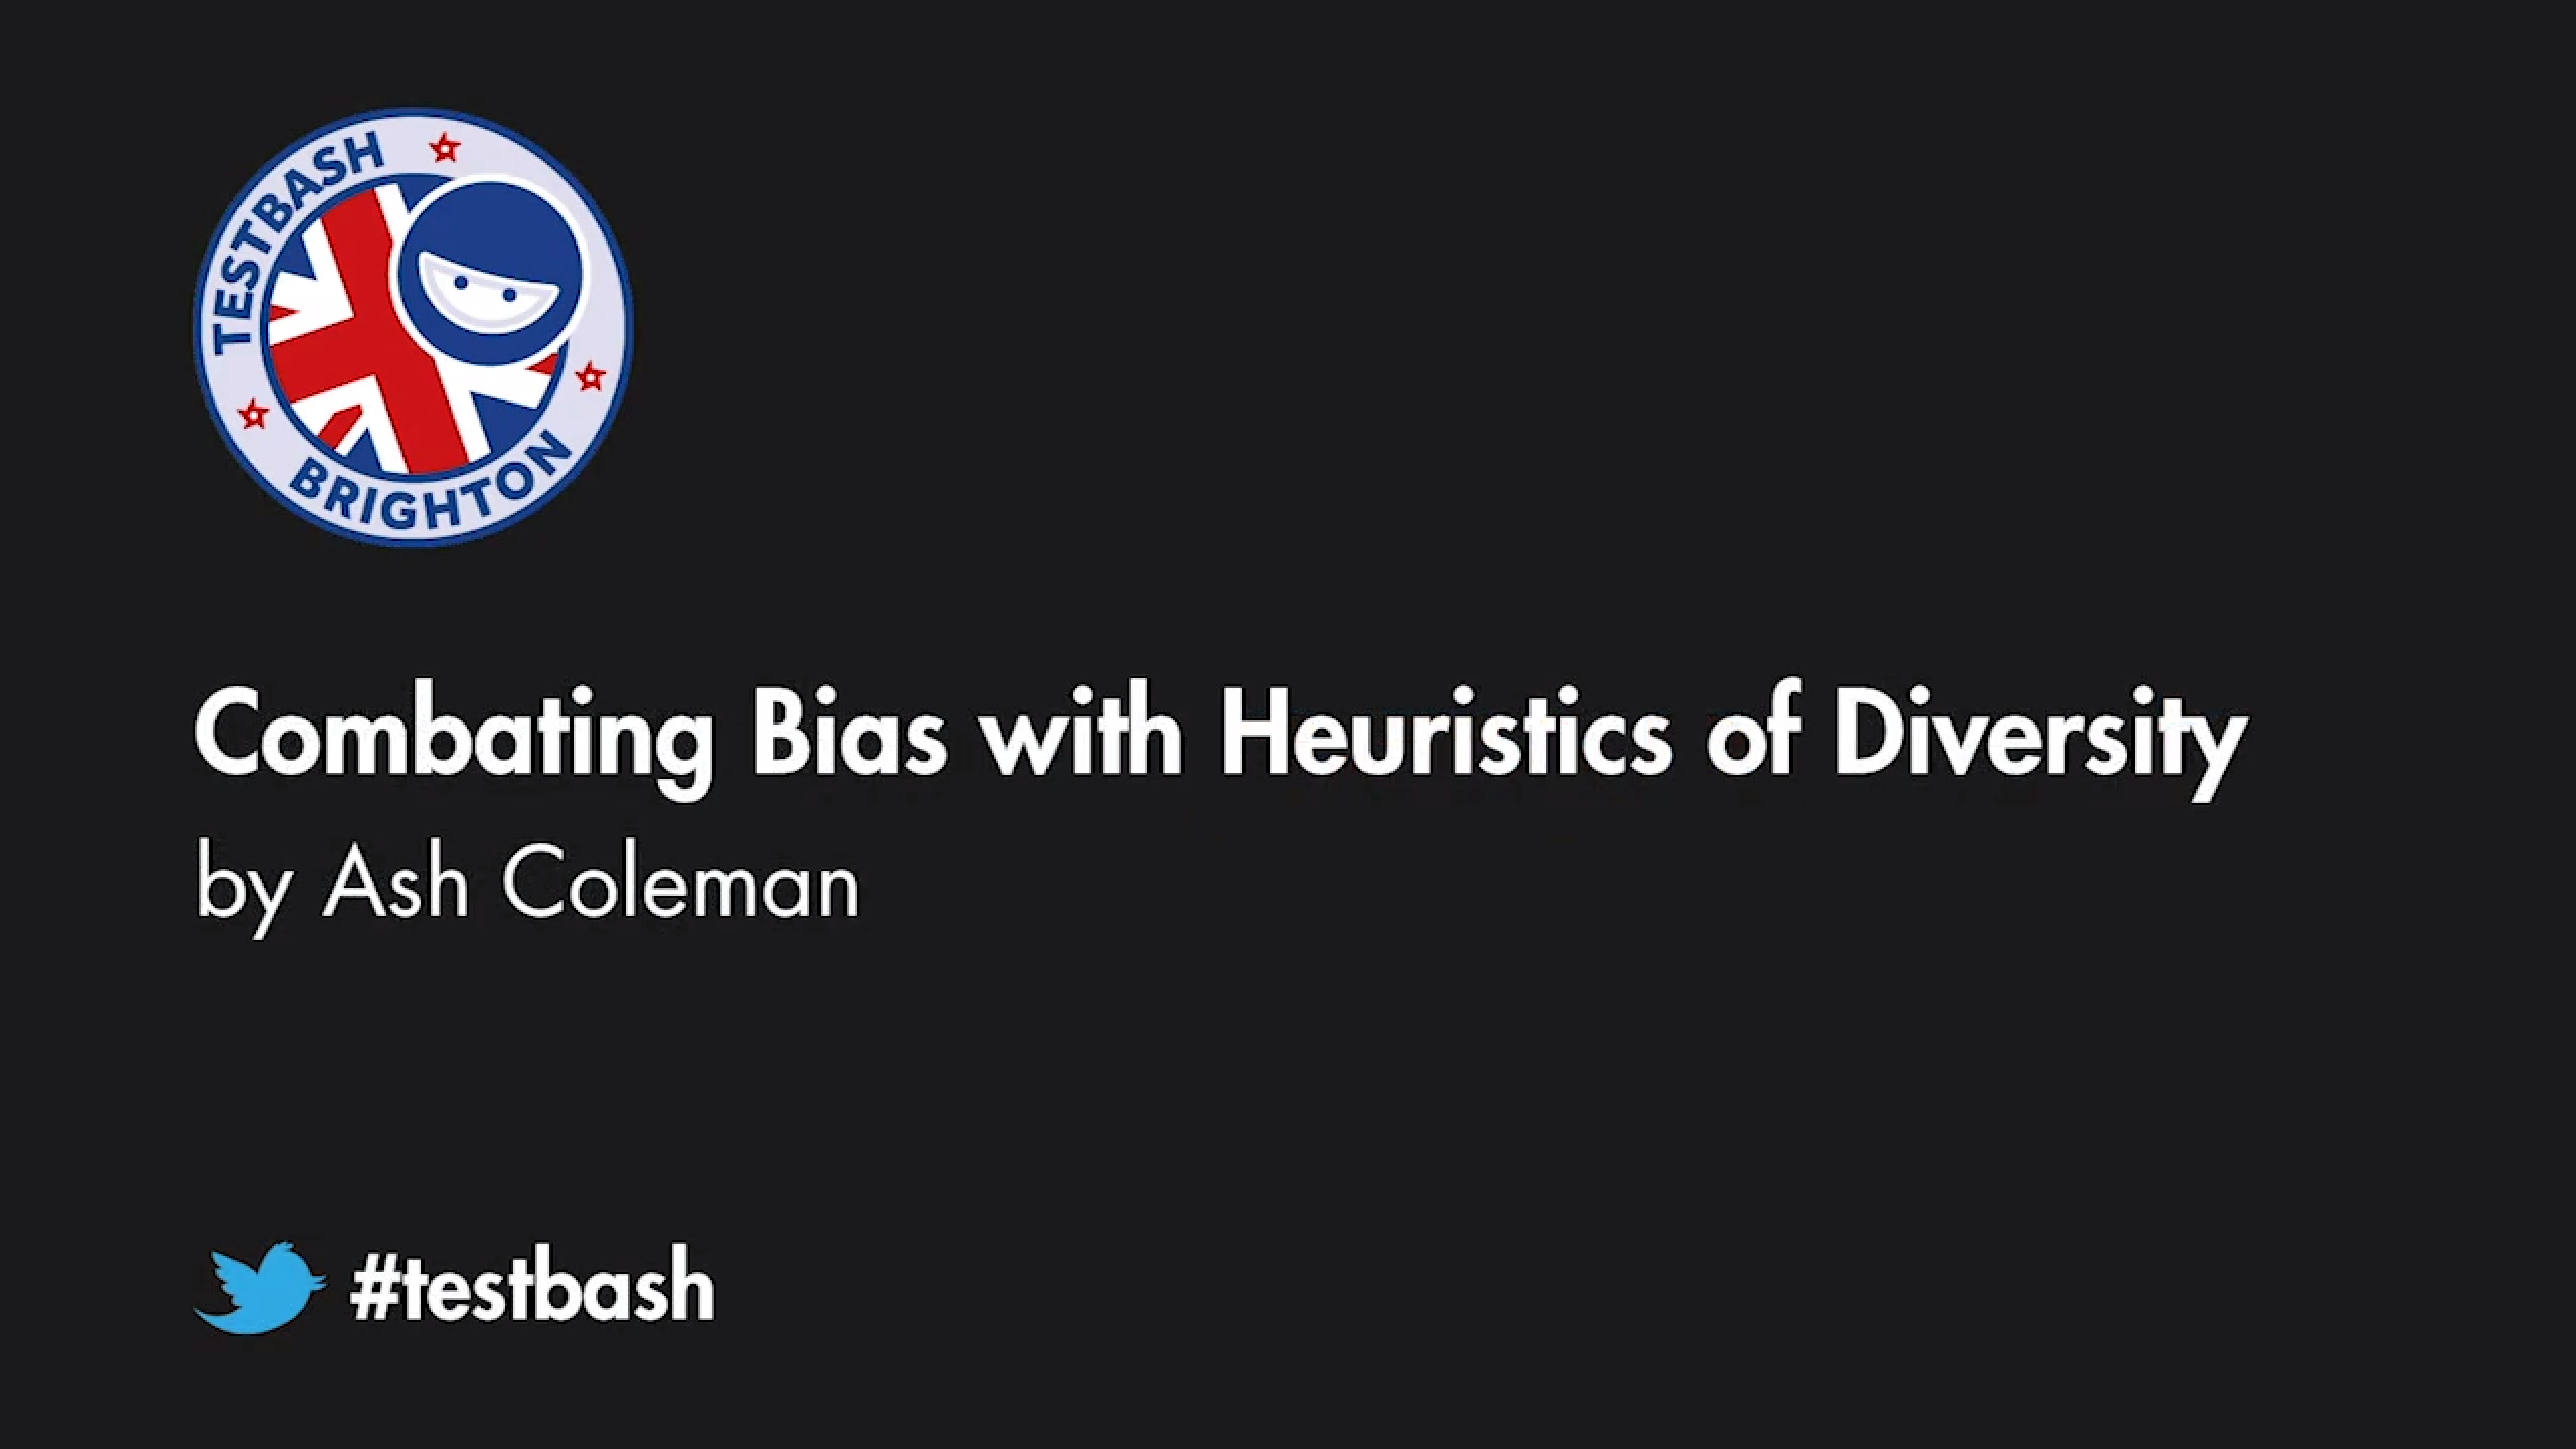 Combating Bias with Heuristics of Diversity - Ash Coleman